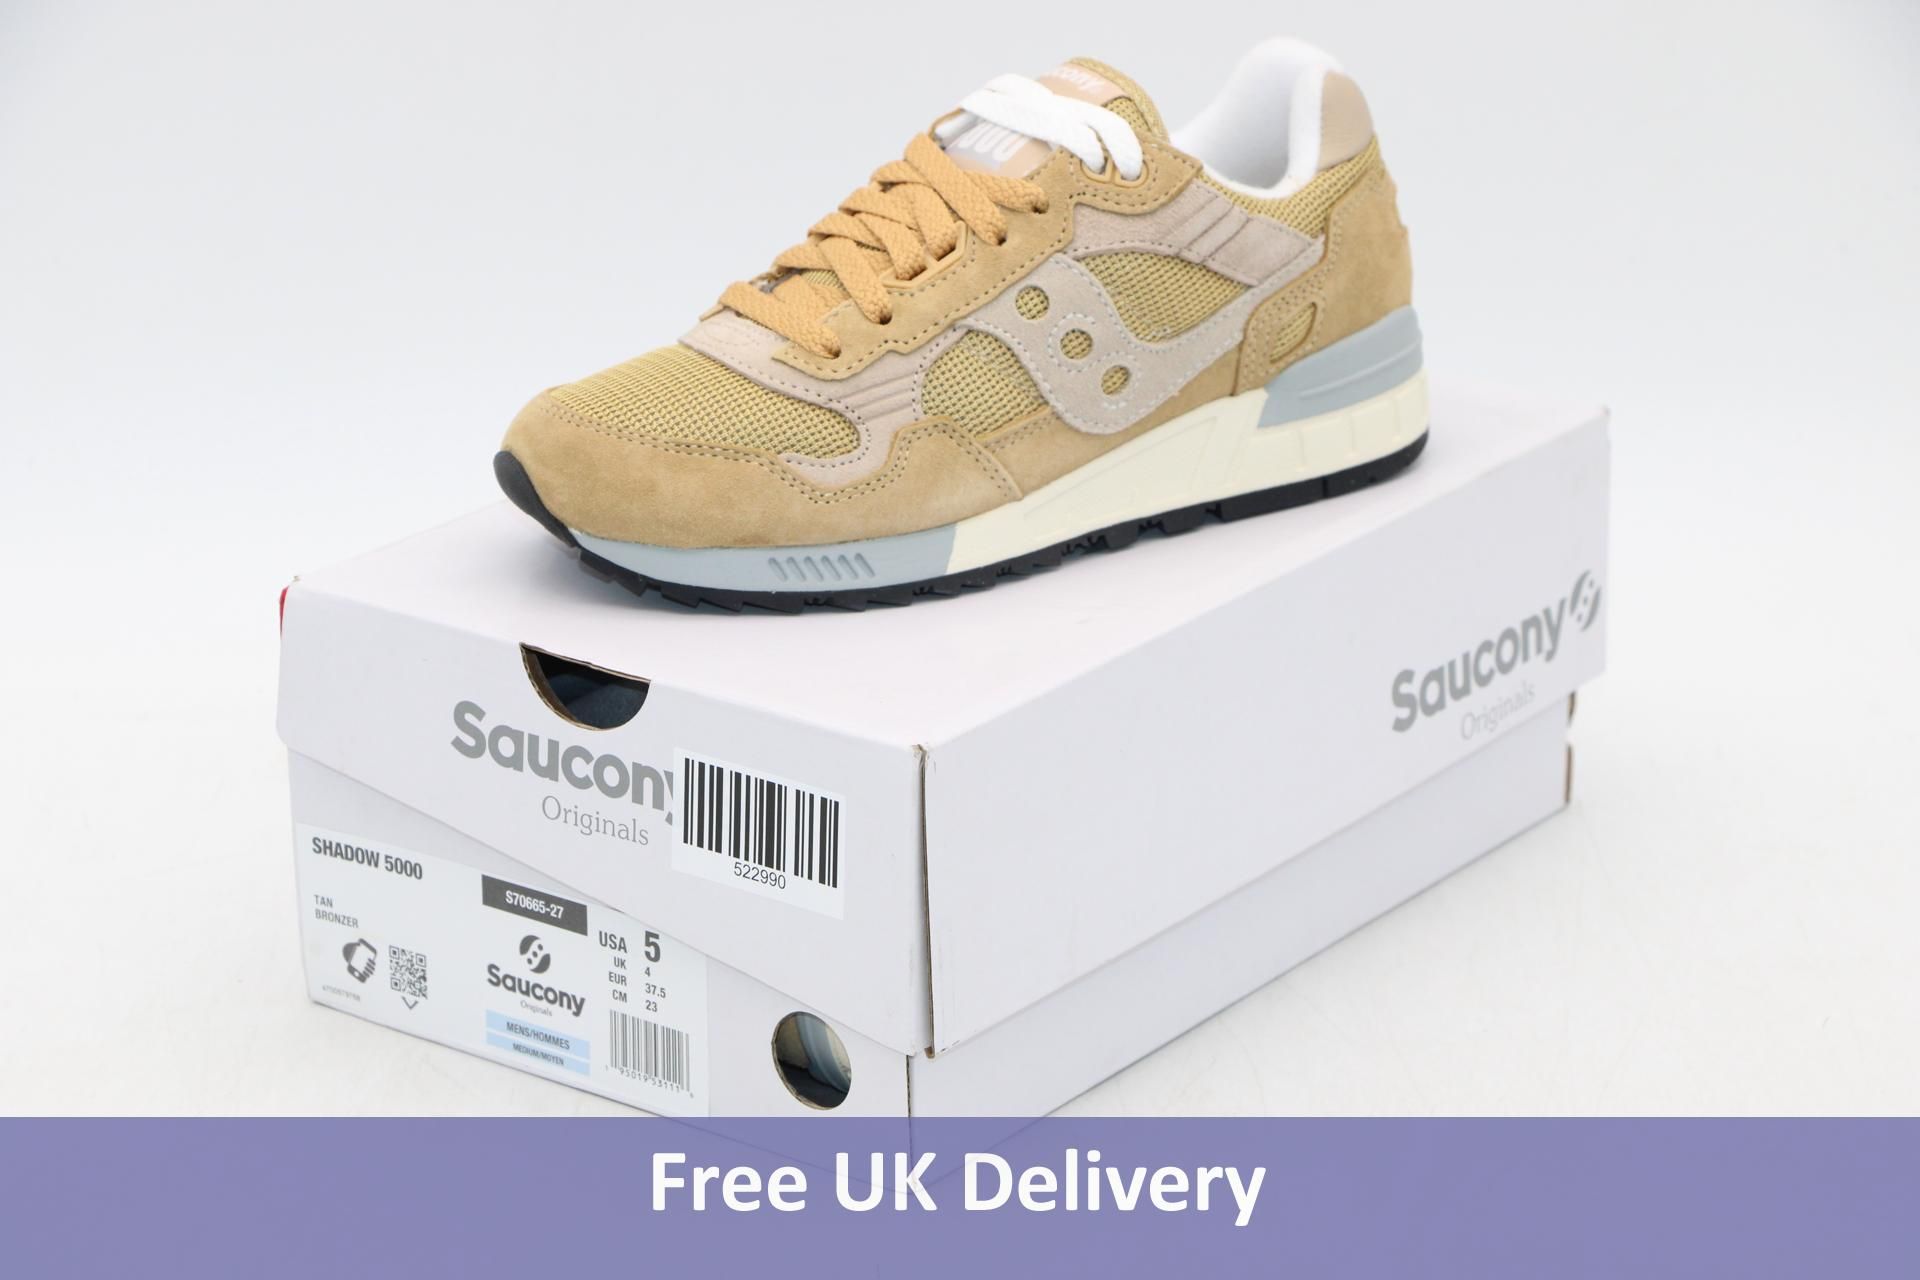 Saucony Shadow 5000 Trainers, Tan/White, UK 4